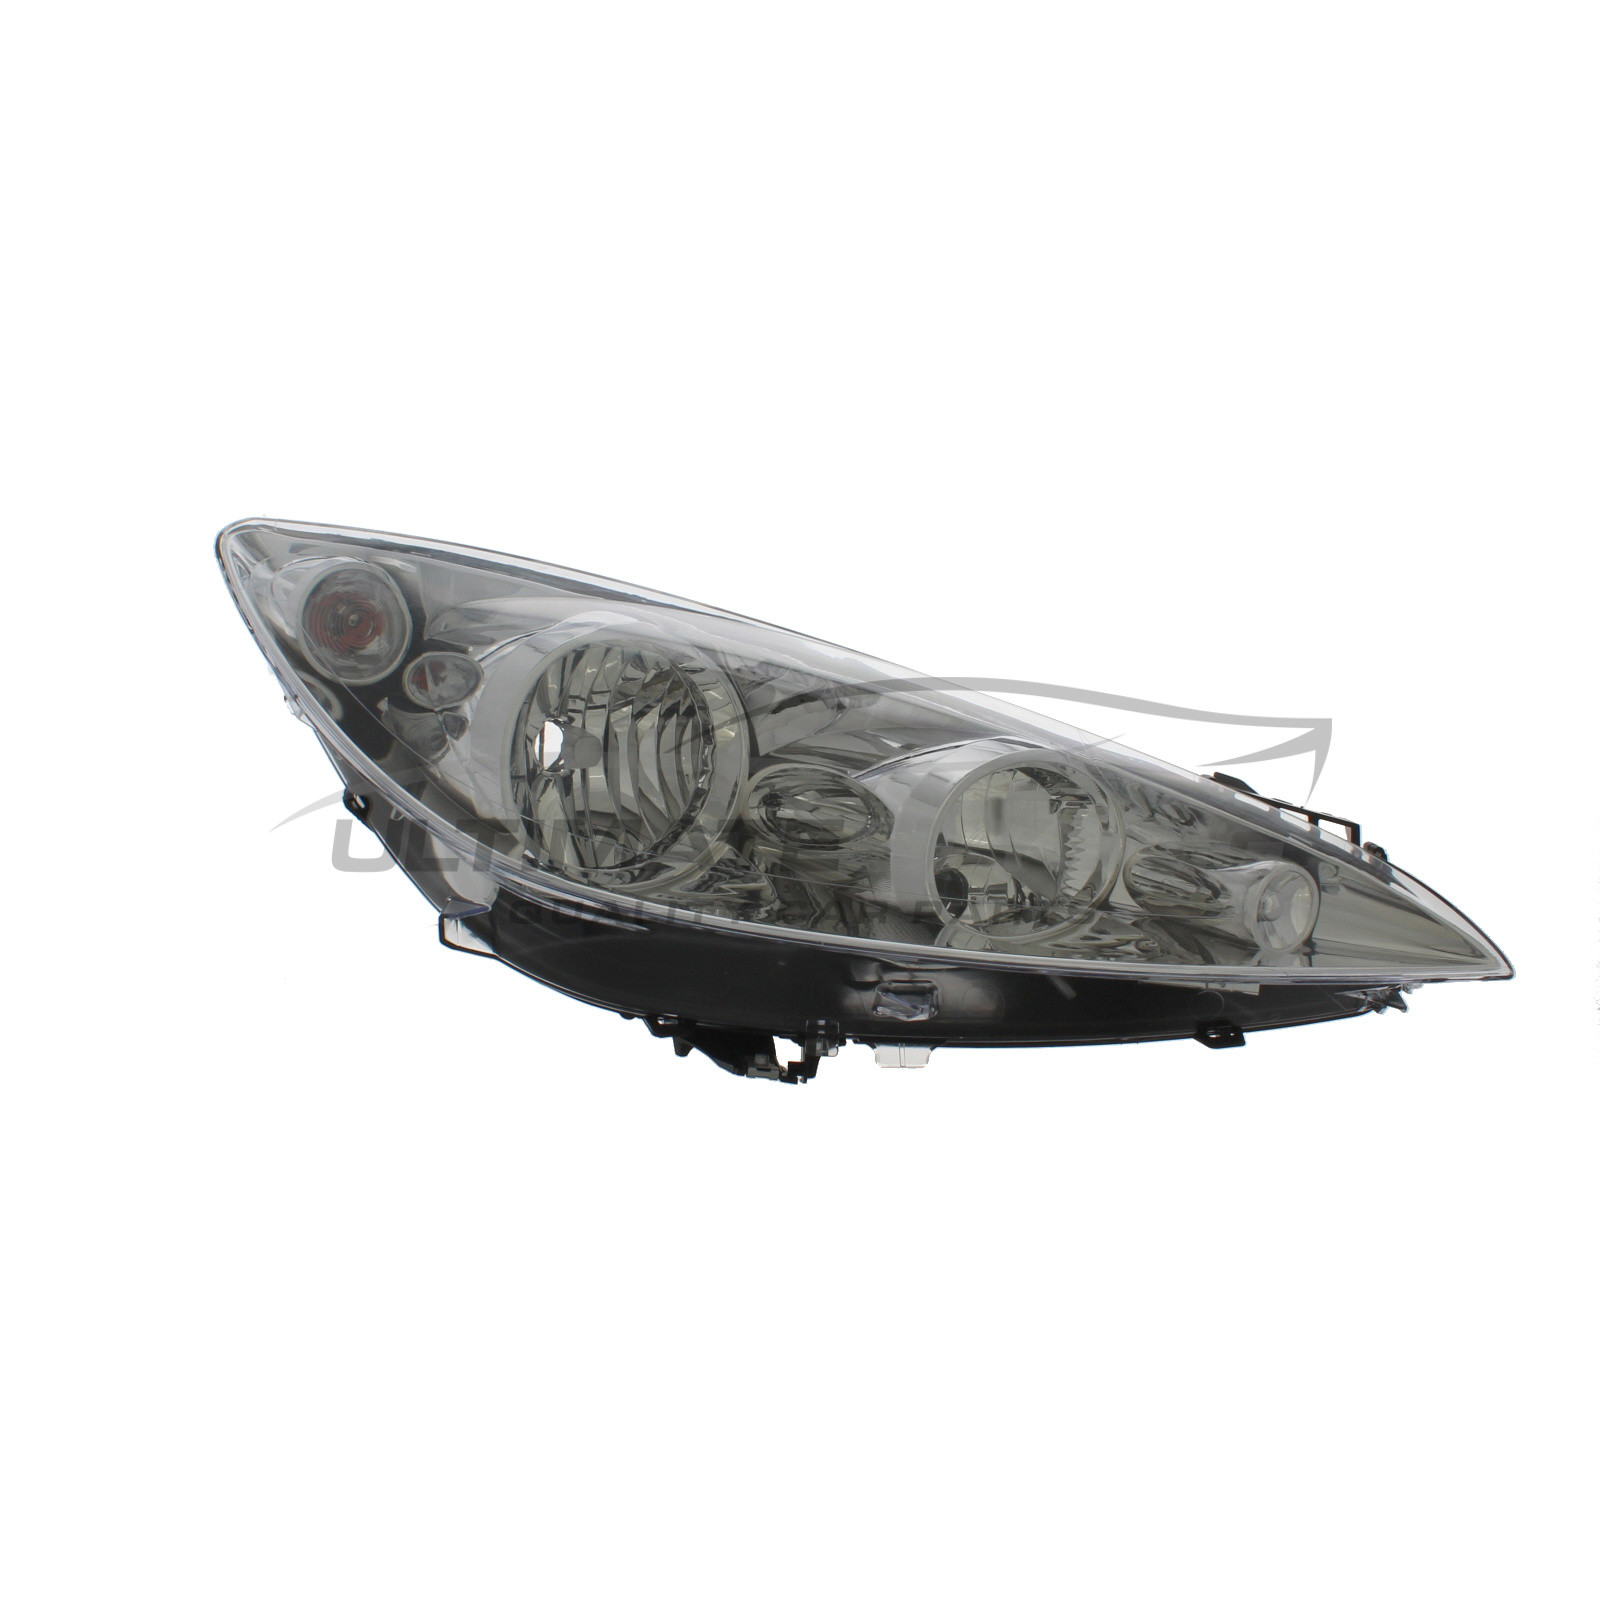 Headlight / Headlamp for Peugeot RCZ